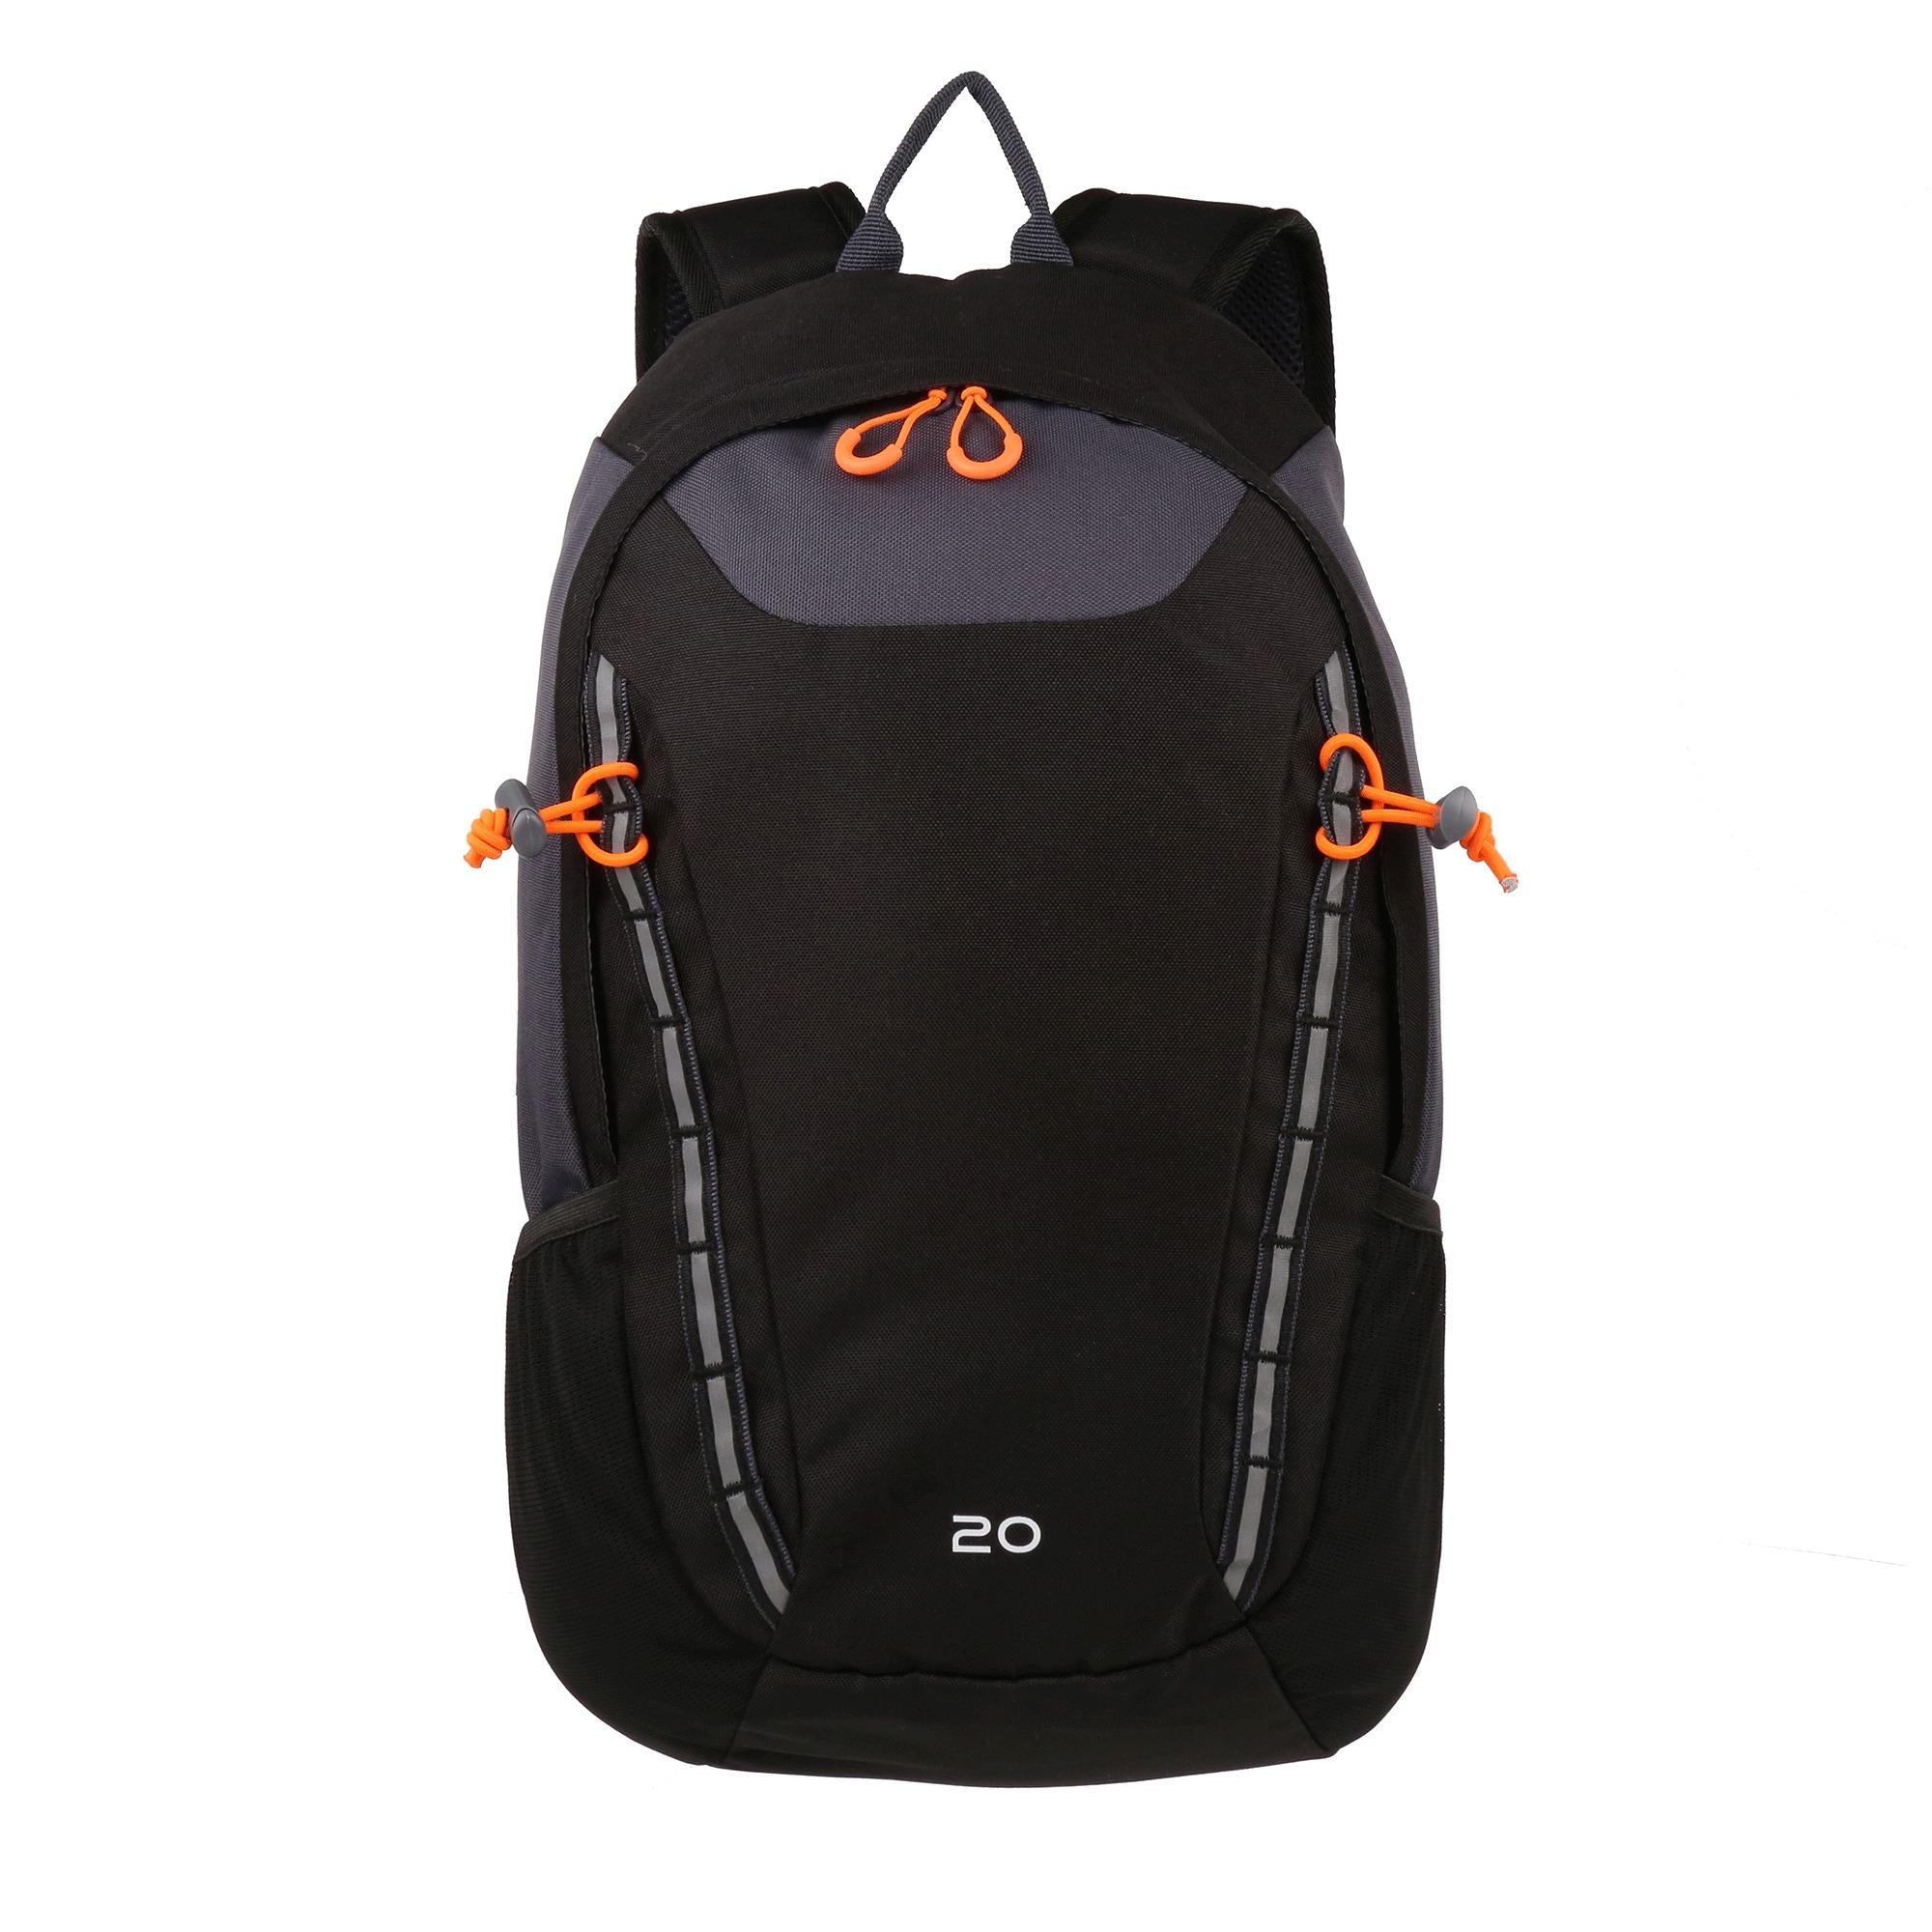 Regatta Ridgetrek 20-litre black backpack rucksack #TRB101